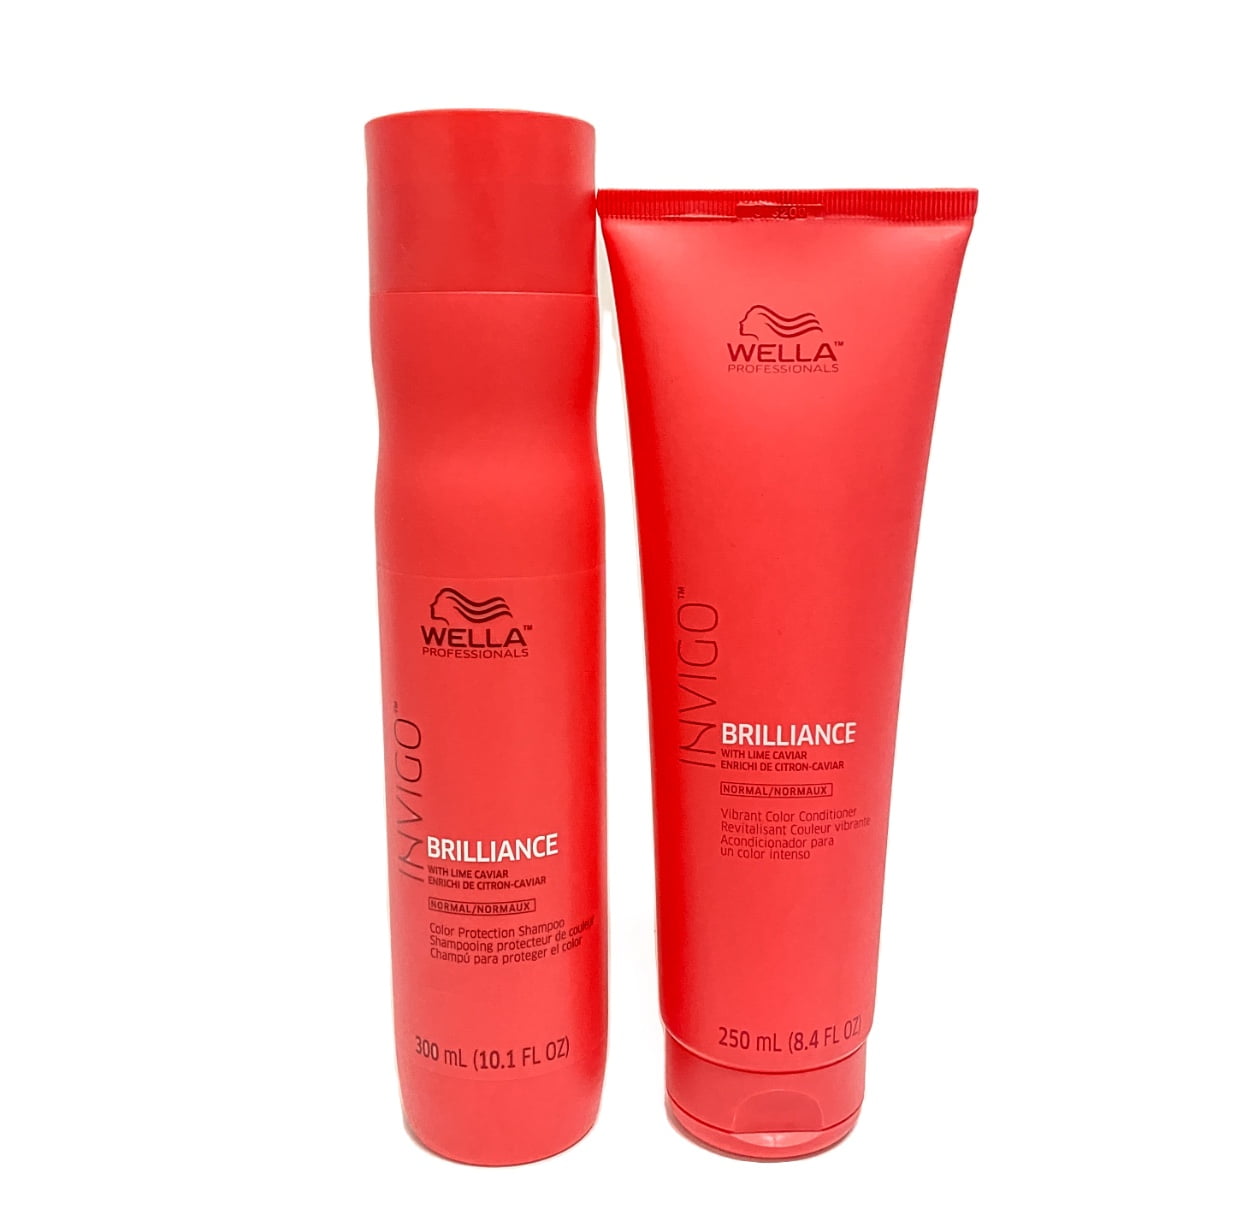 Brilliance Shampoo(10.1fl.oz) & Conditioner(8.4fl.oz) Duo - Walmart.com